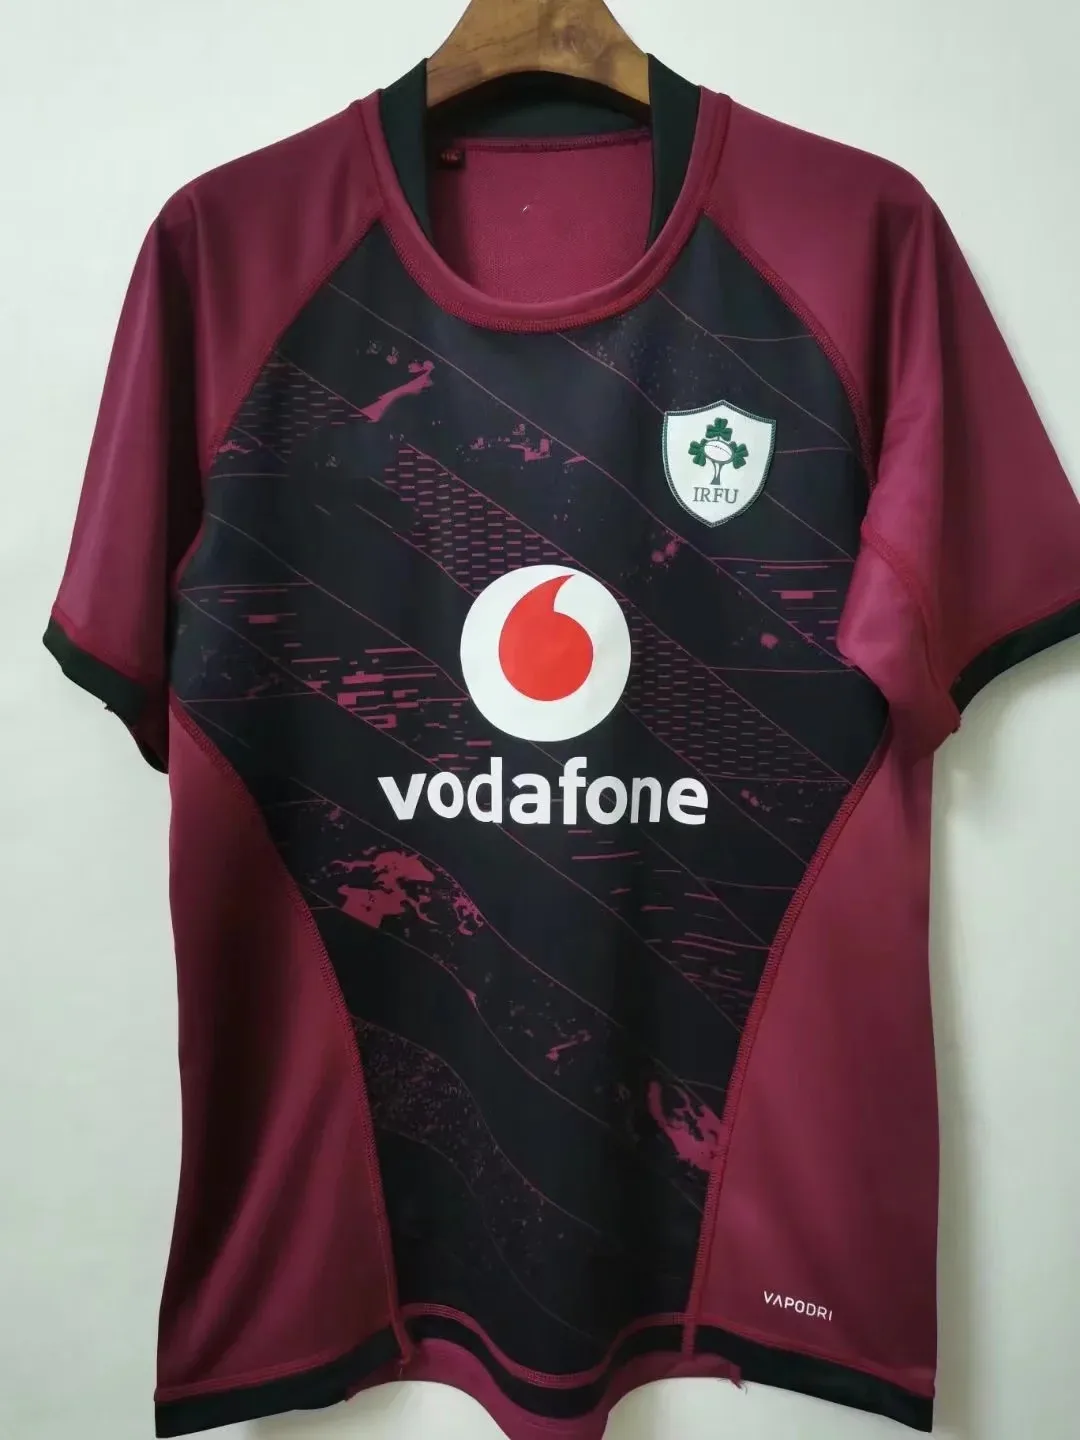 Details about   2021 Ireland away rugby jersey shirt S-3XL 